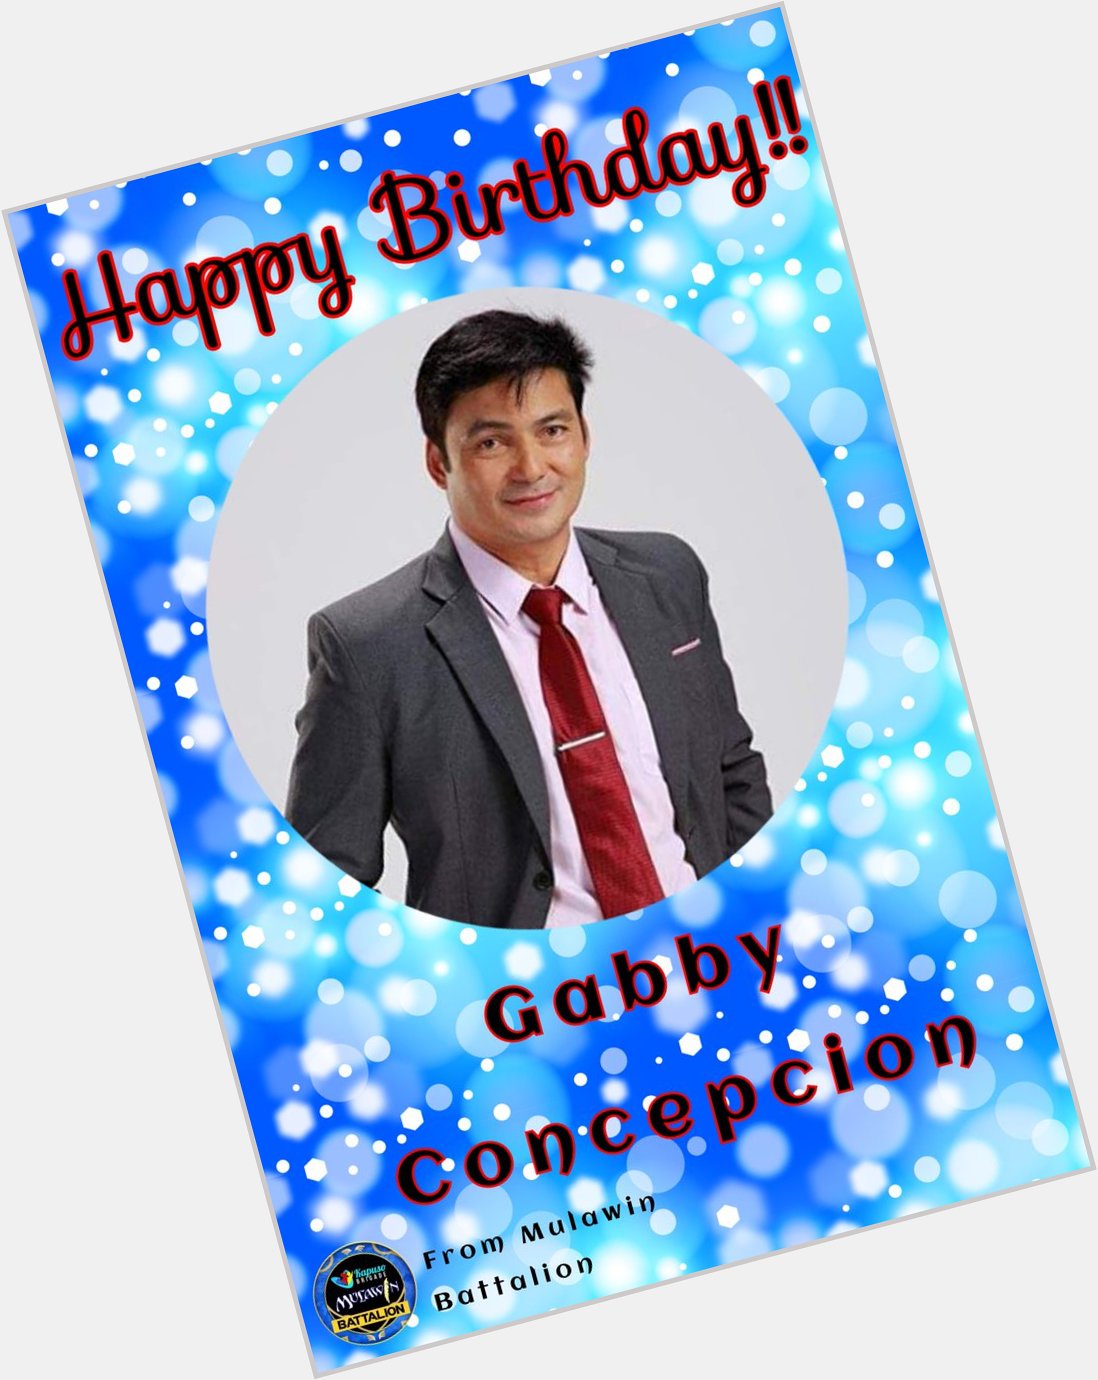 Happy Birthday po Sir Gabby Concepcion Stay safe and God bless po! 